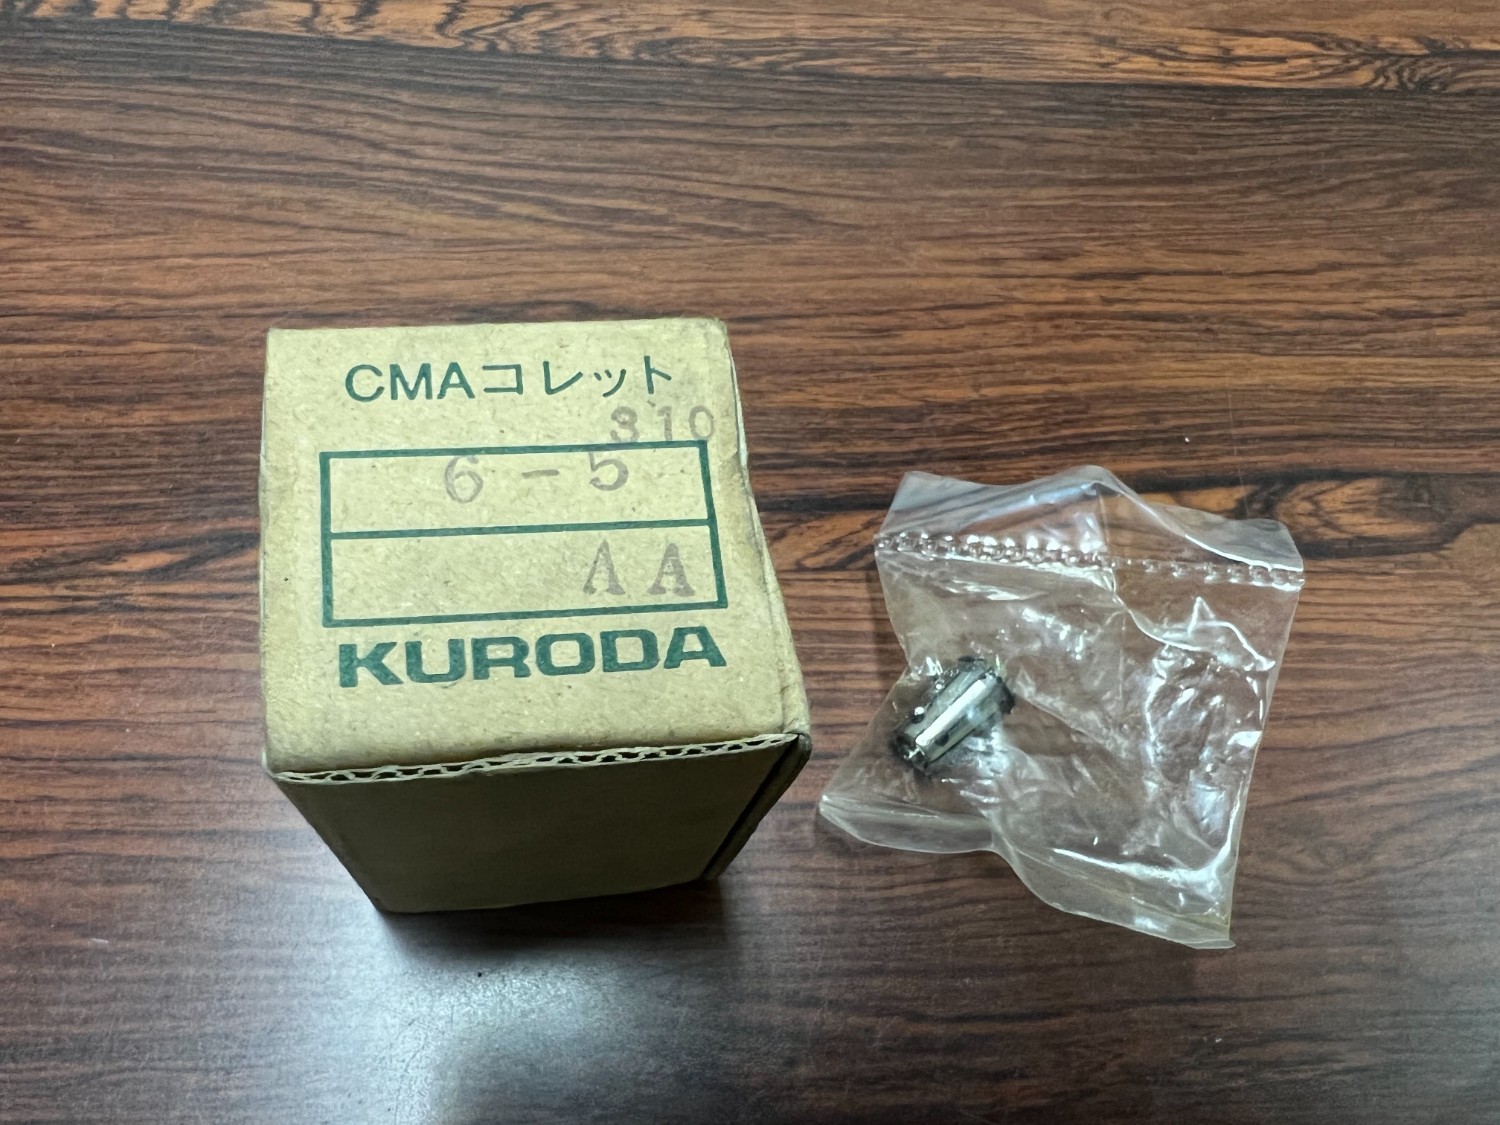 TN230017 CMAコレット　KURODA WINWELL　6-5AA　未使用に近い!!